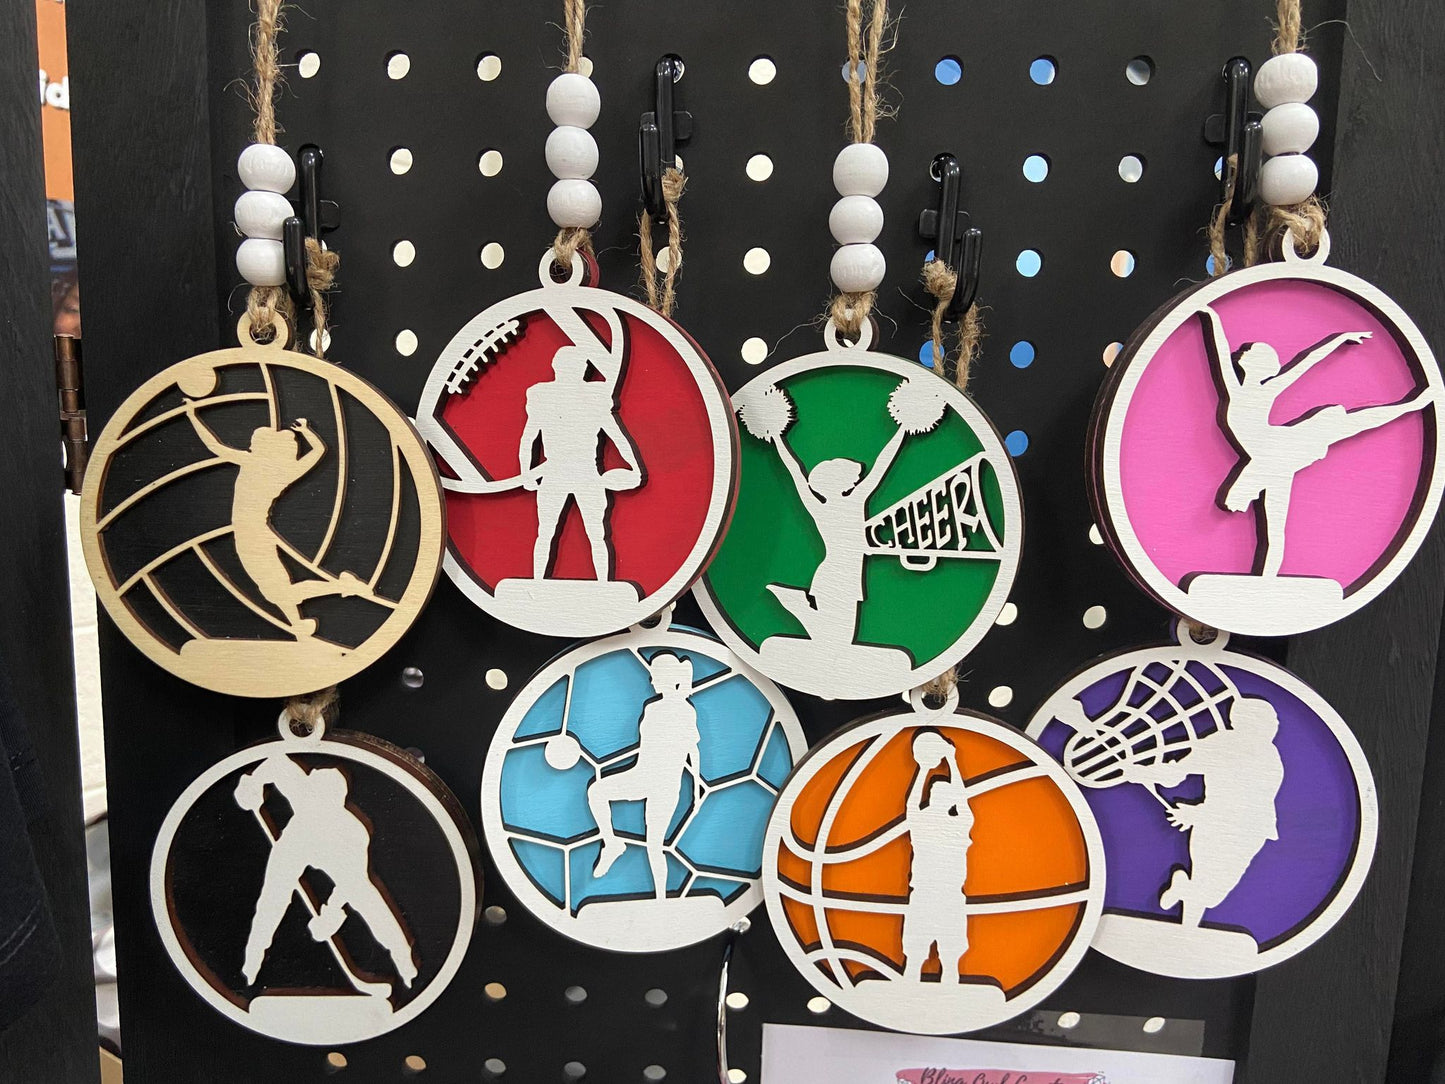 Lacrosse Ornament